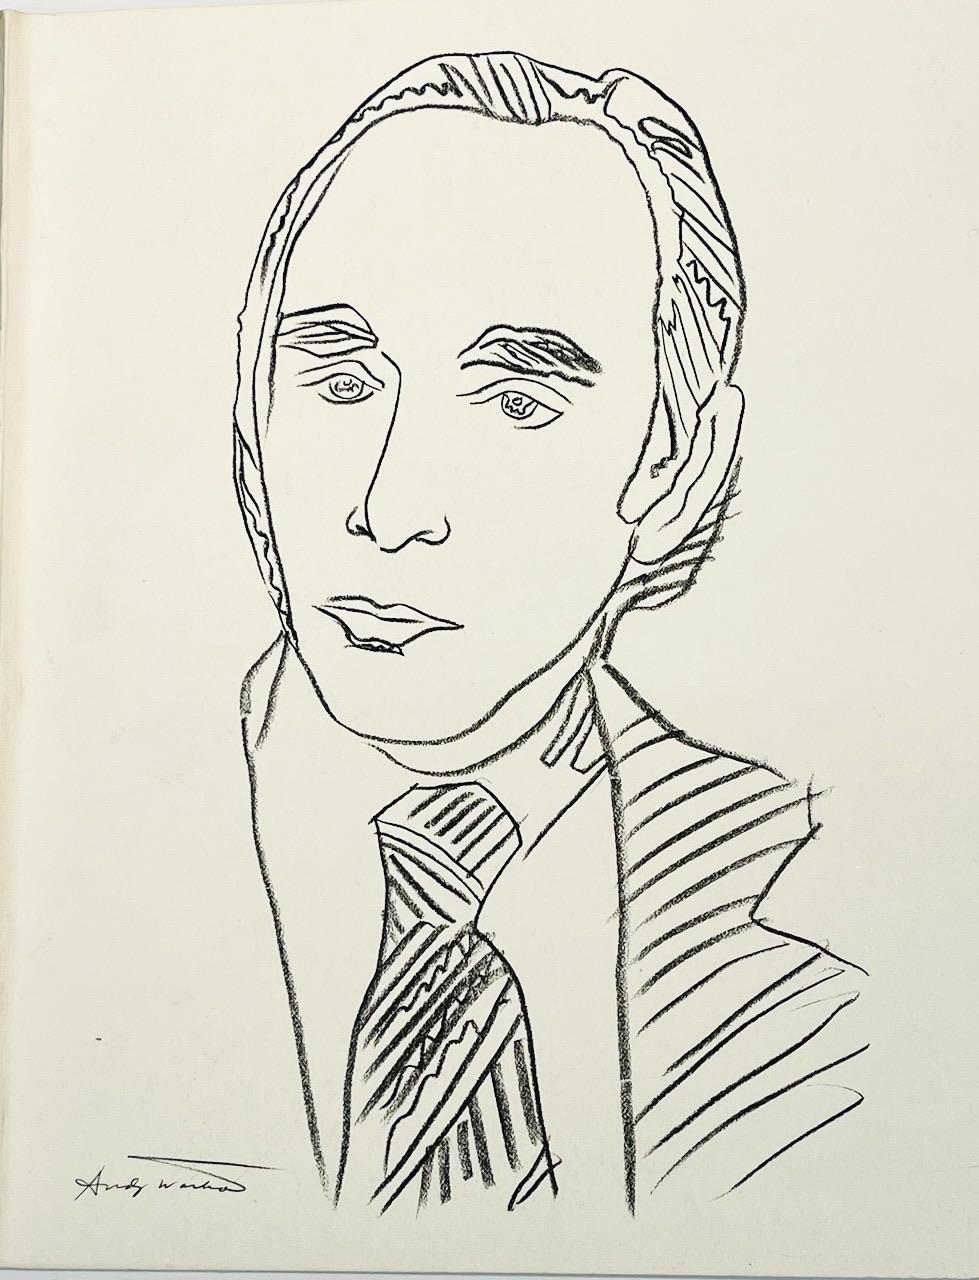 Warhol illustrated Leo Castelli Twenty Years book  - Pop Art Mixed Media Art by Andy Warhol